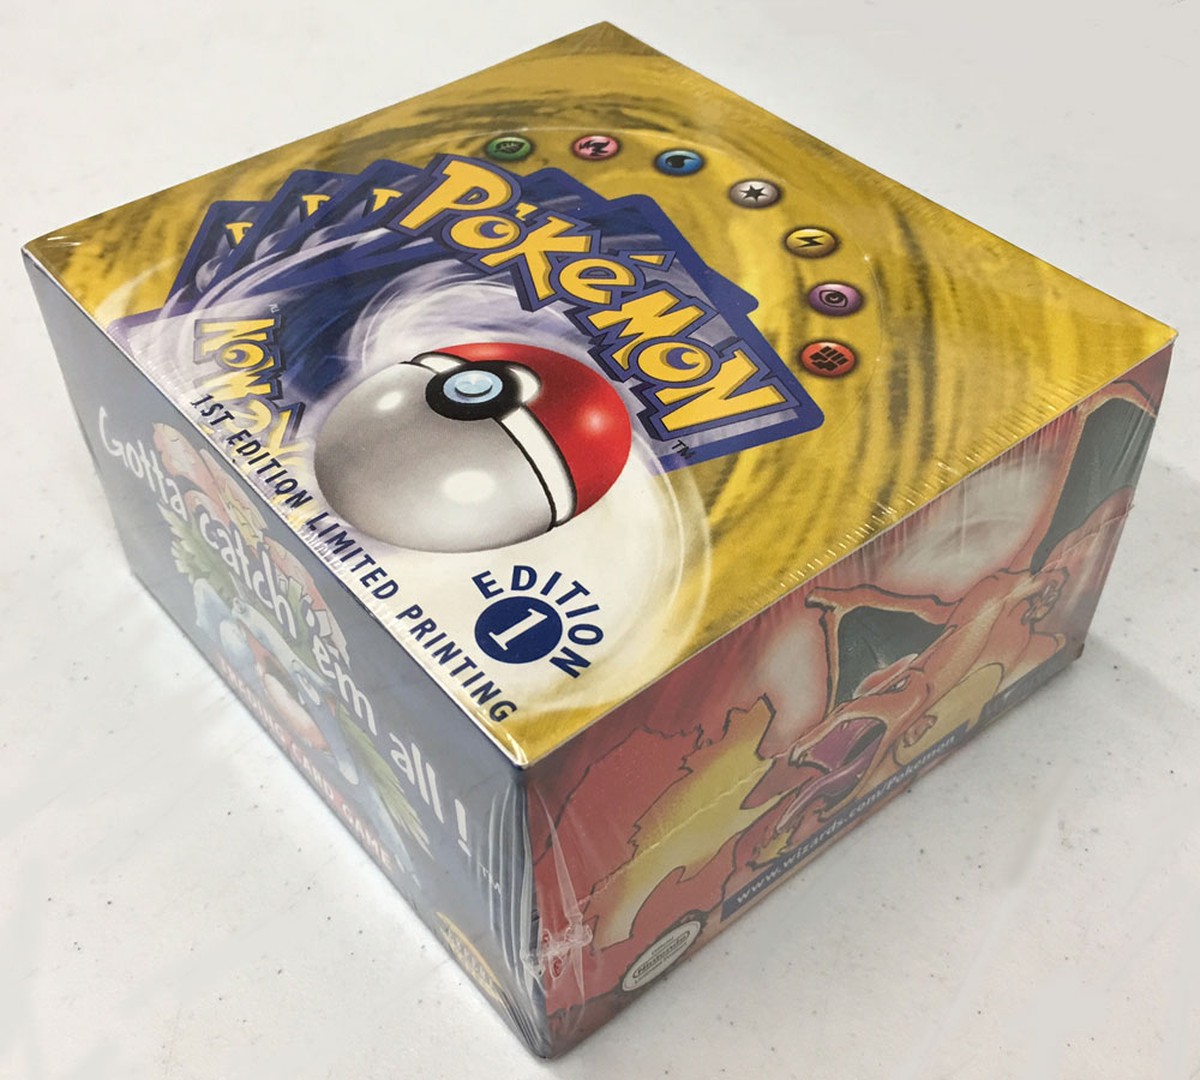 pokemon card booster boxes